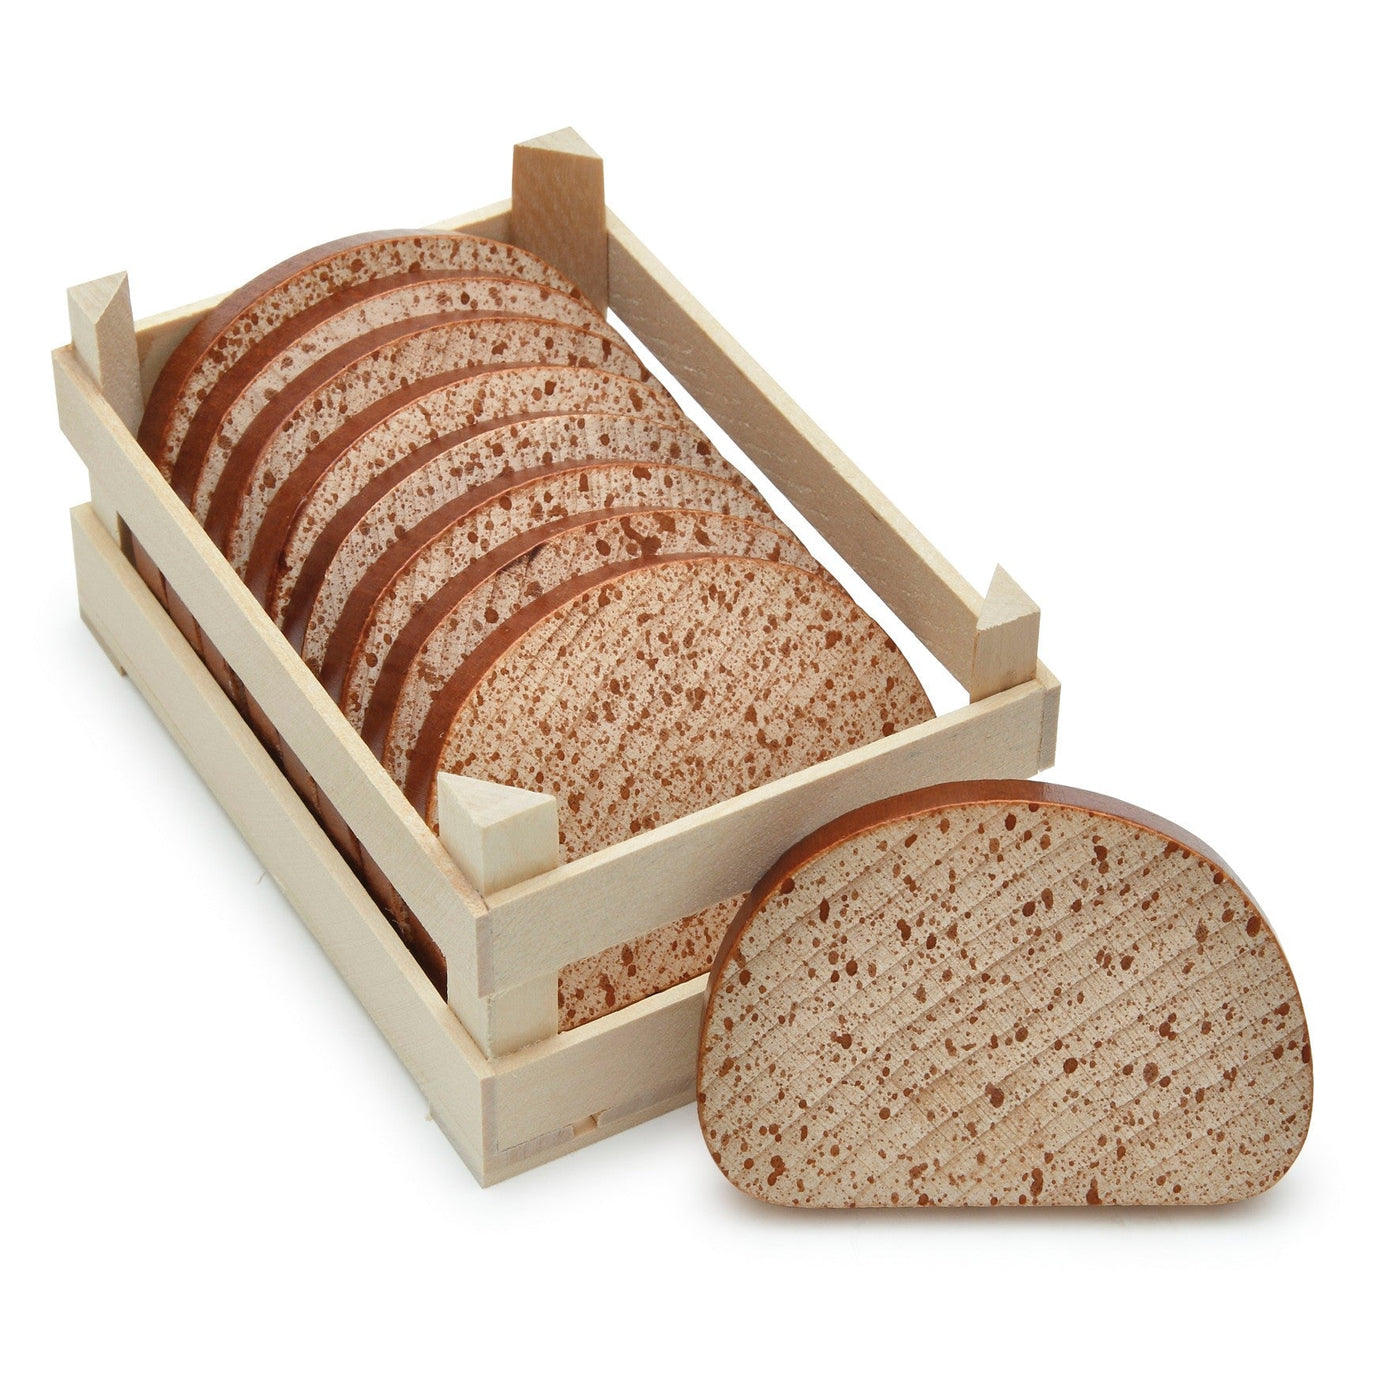 Erzi Slice of Bread - Wooden Play Food